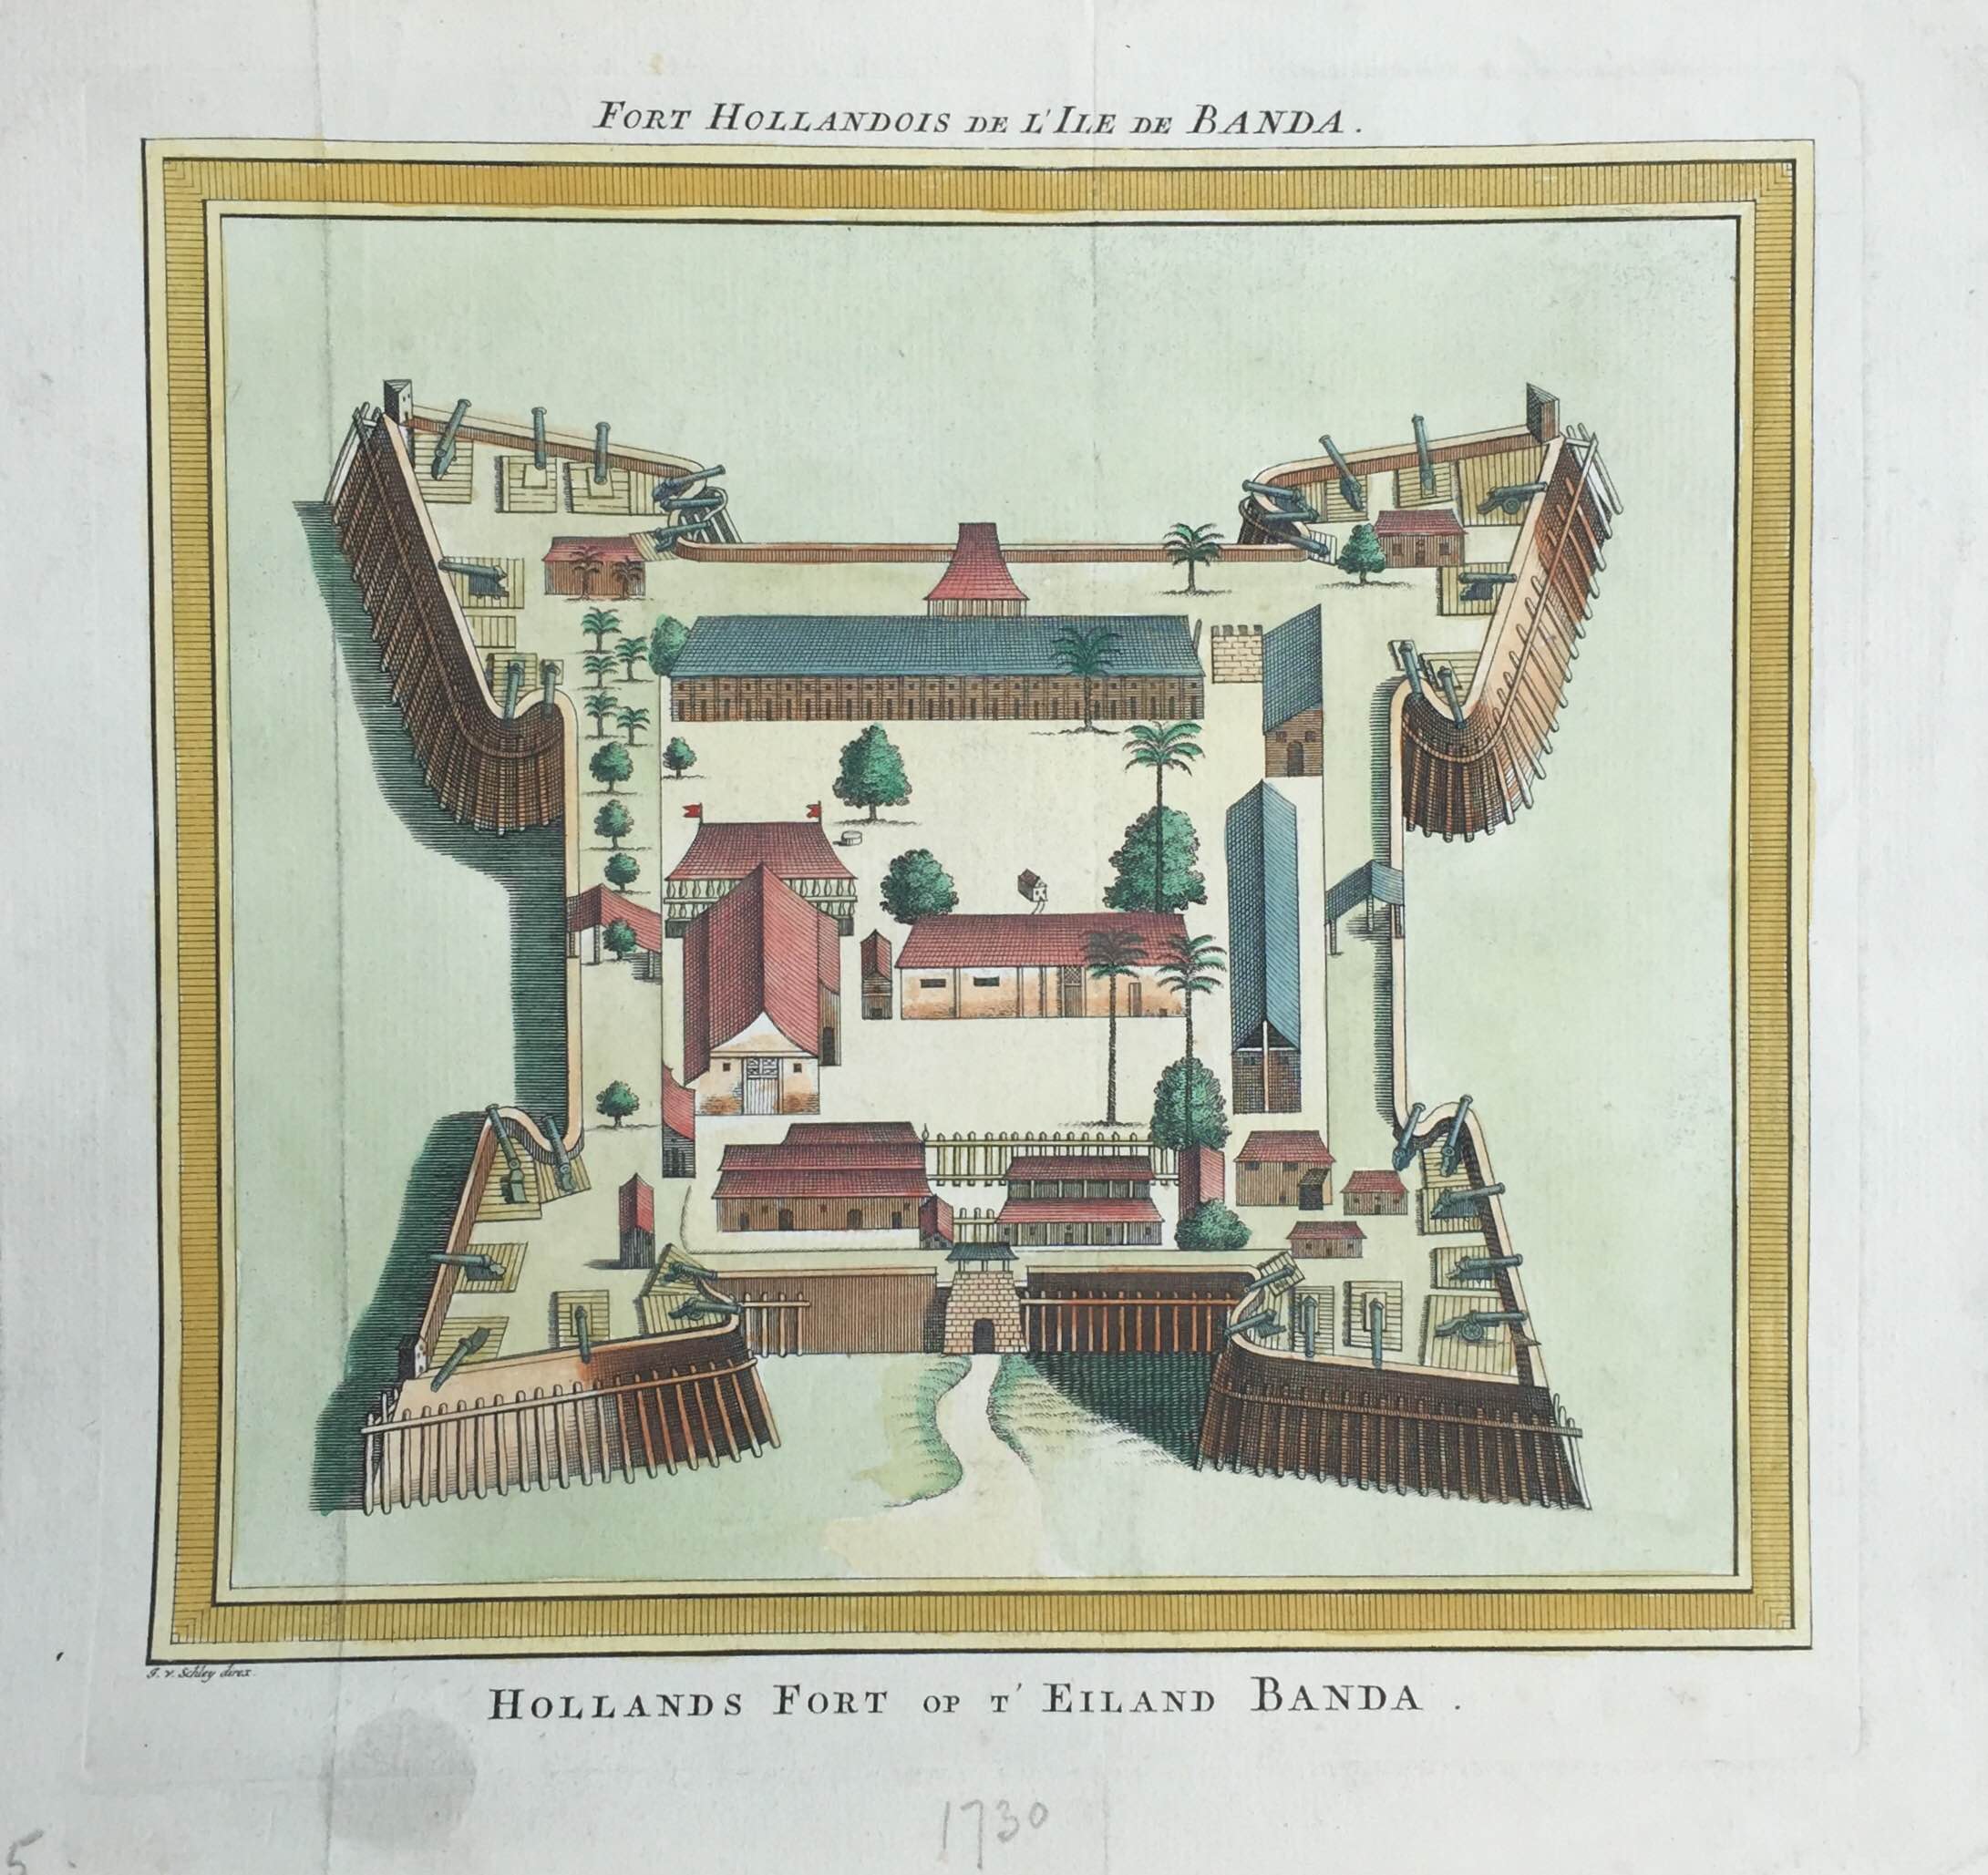 Map antik Fort Nassau | Sumber: Bartele Gallery